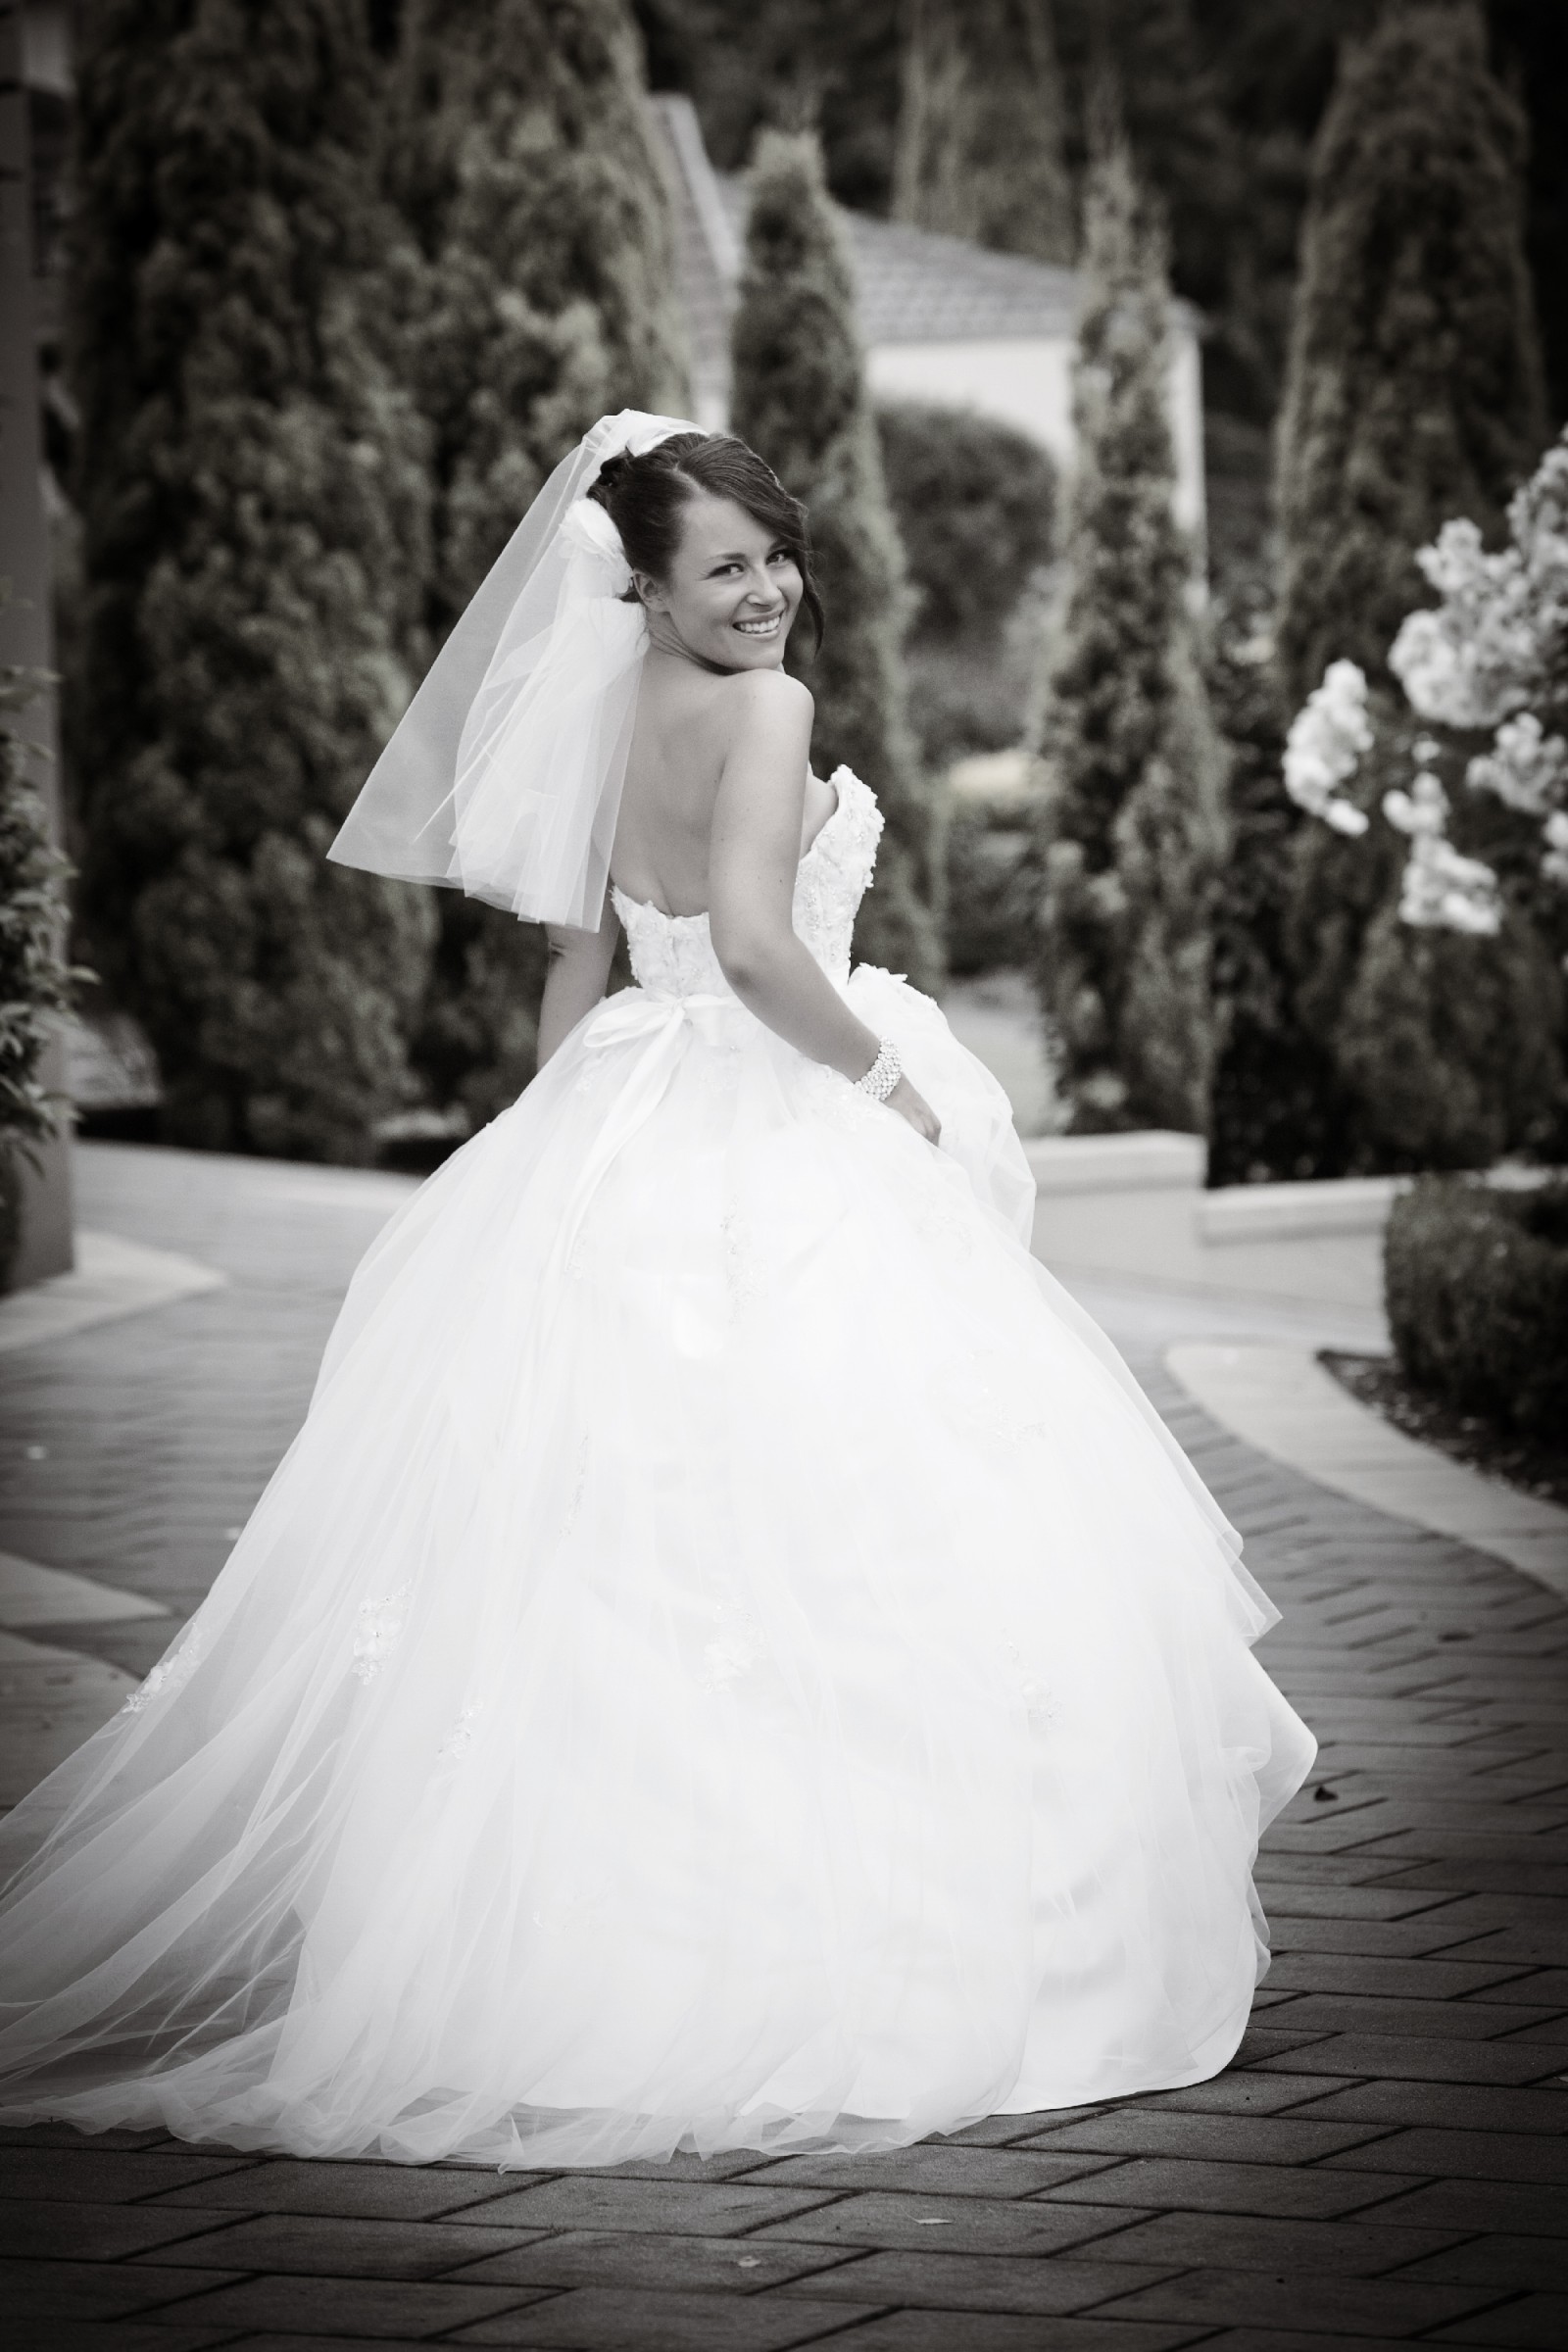 alfred angelo snow white wedding dress